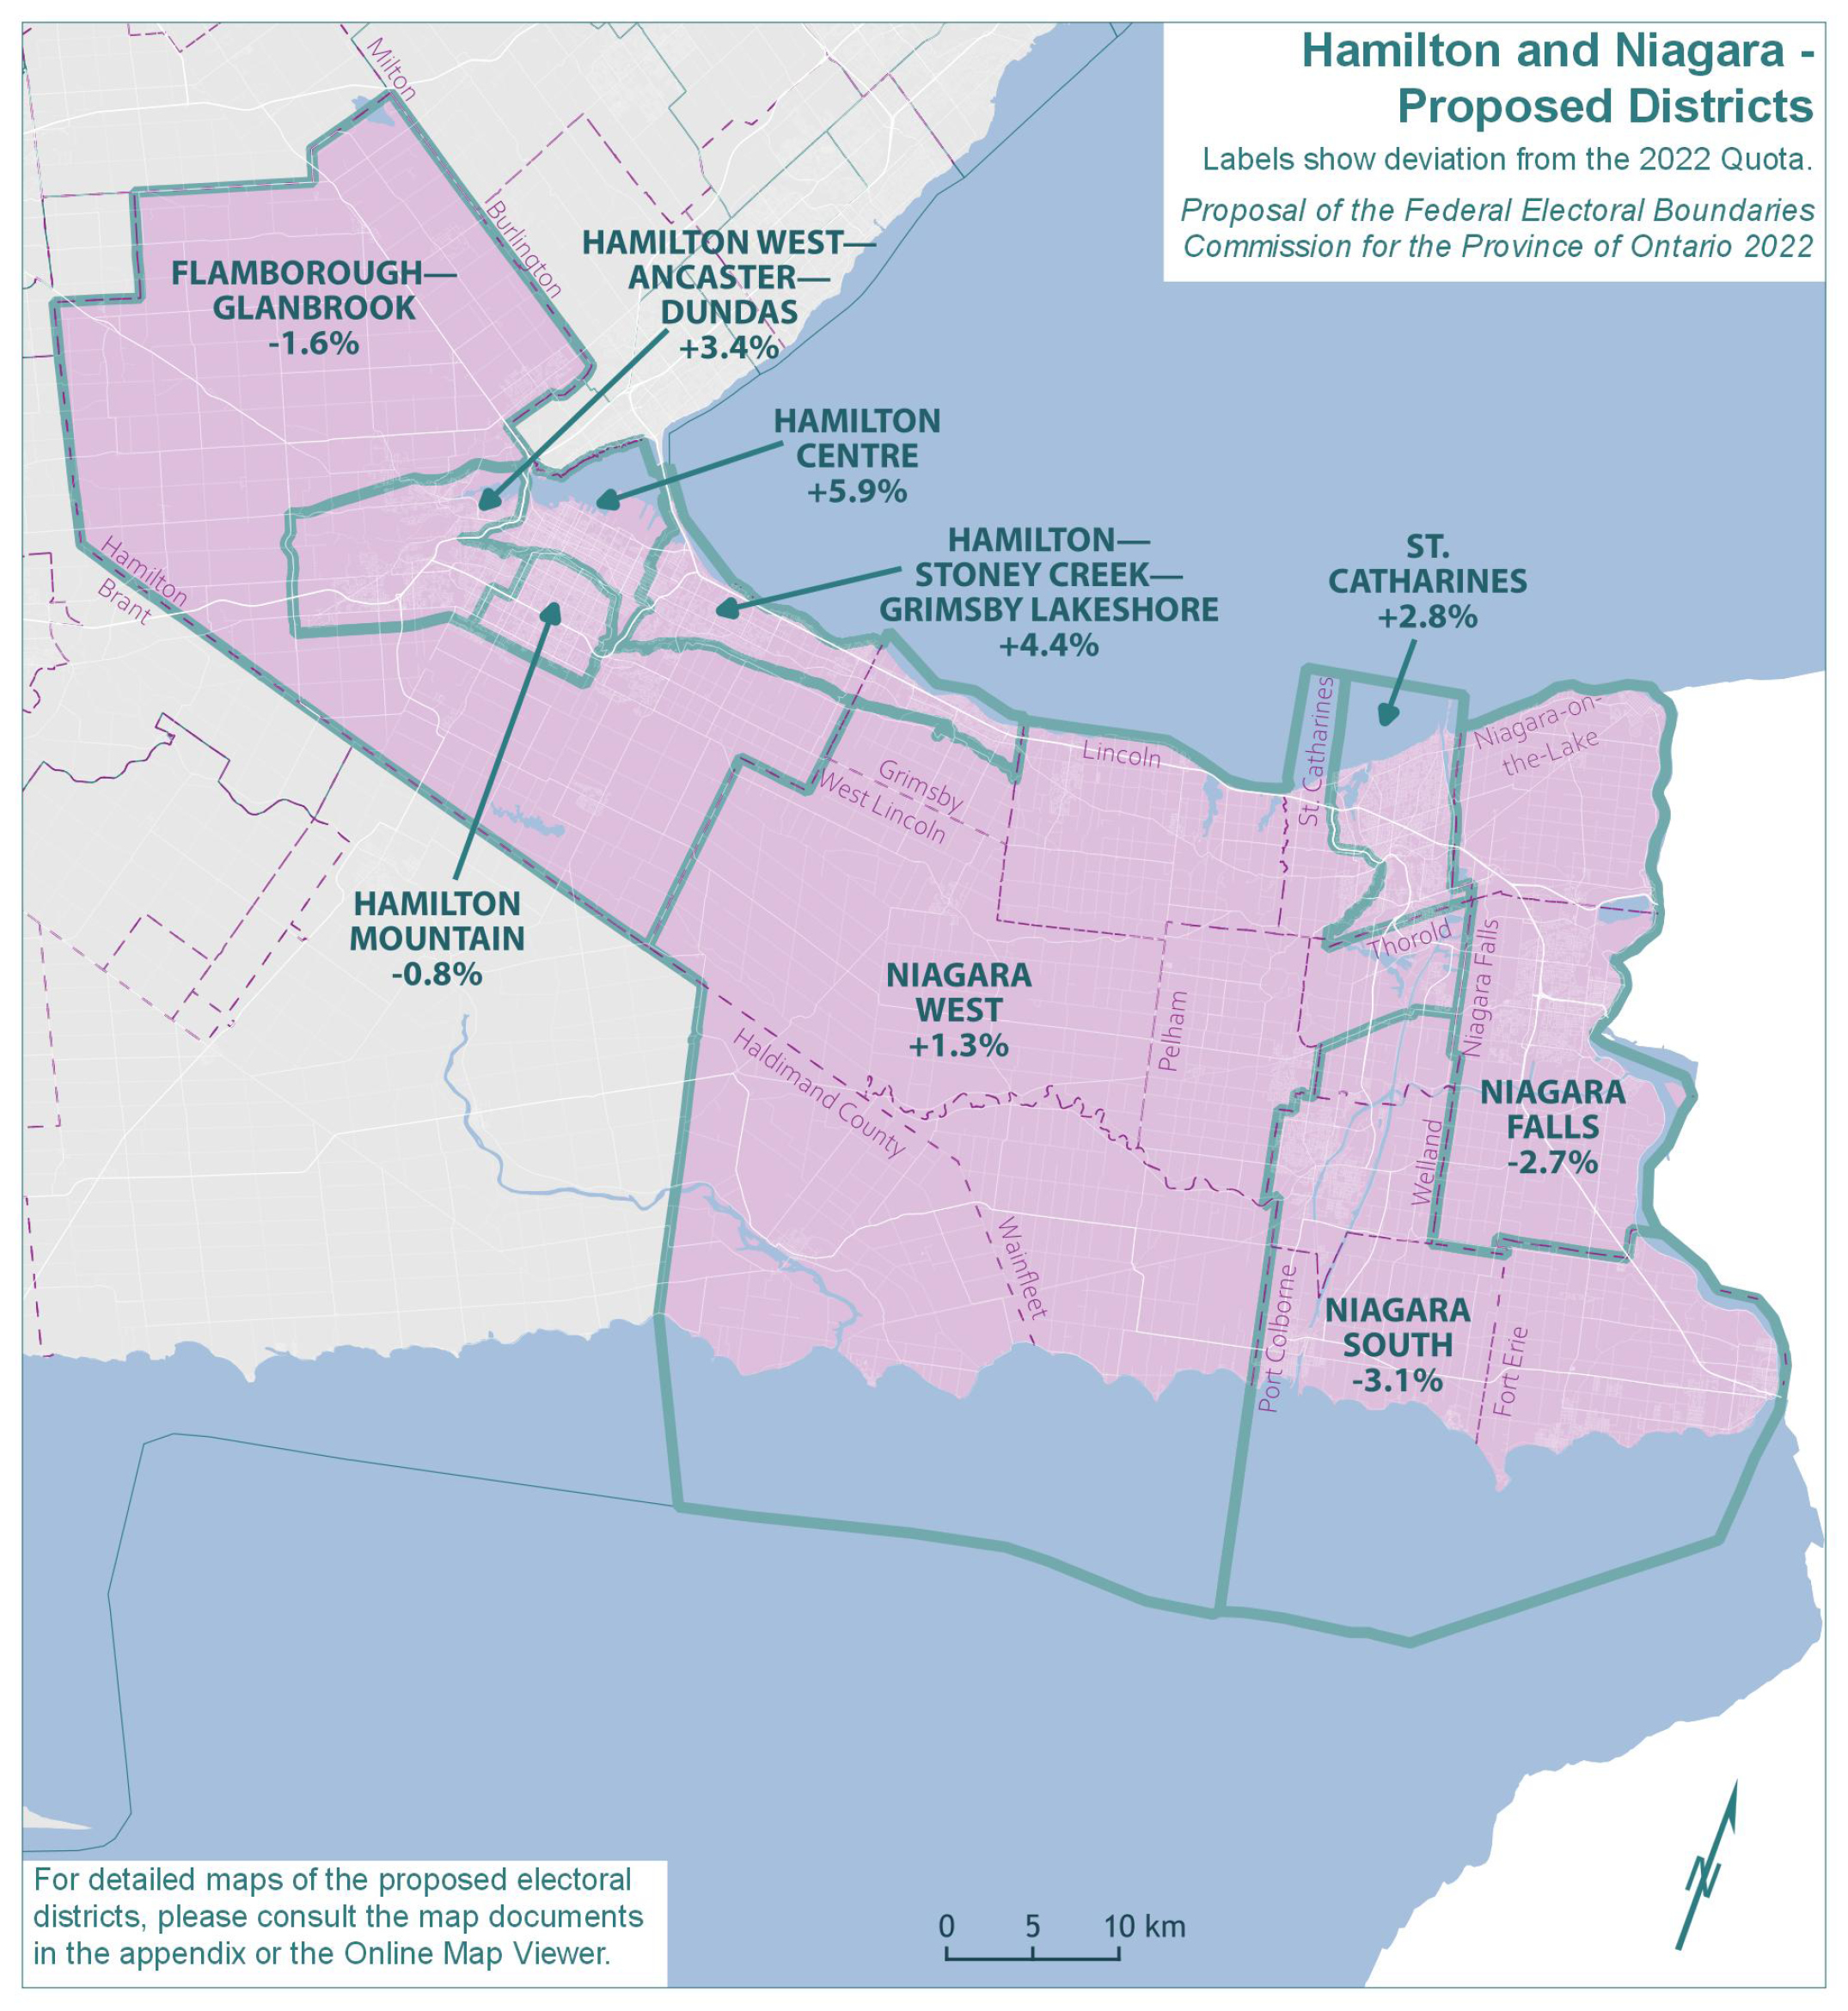 Hamilton and Niagara - Proposed Districts